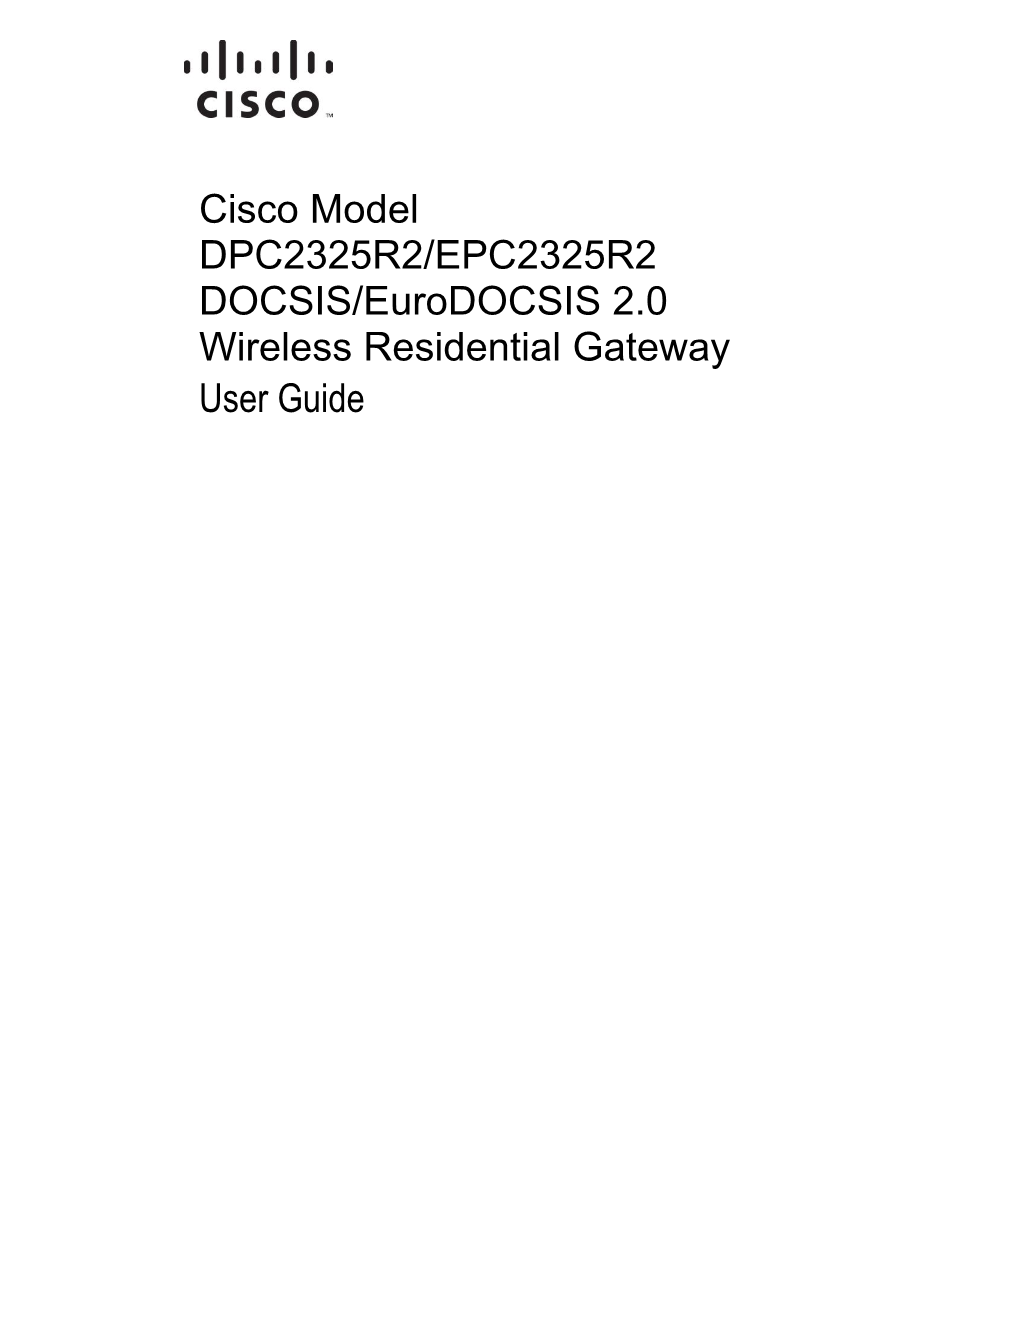 Cisco Model DPC2325R2/EPC2325R2 DOCSIS/Eurodocsis 2.0 Wireless Residential Gateway User Guide